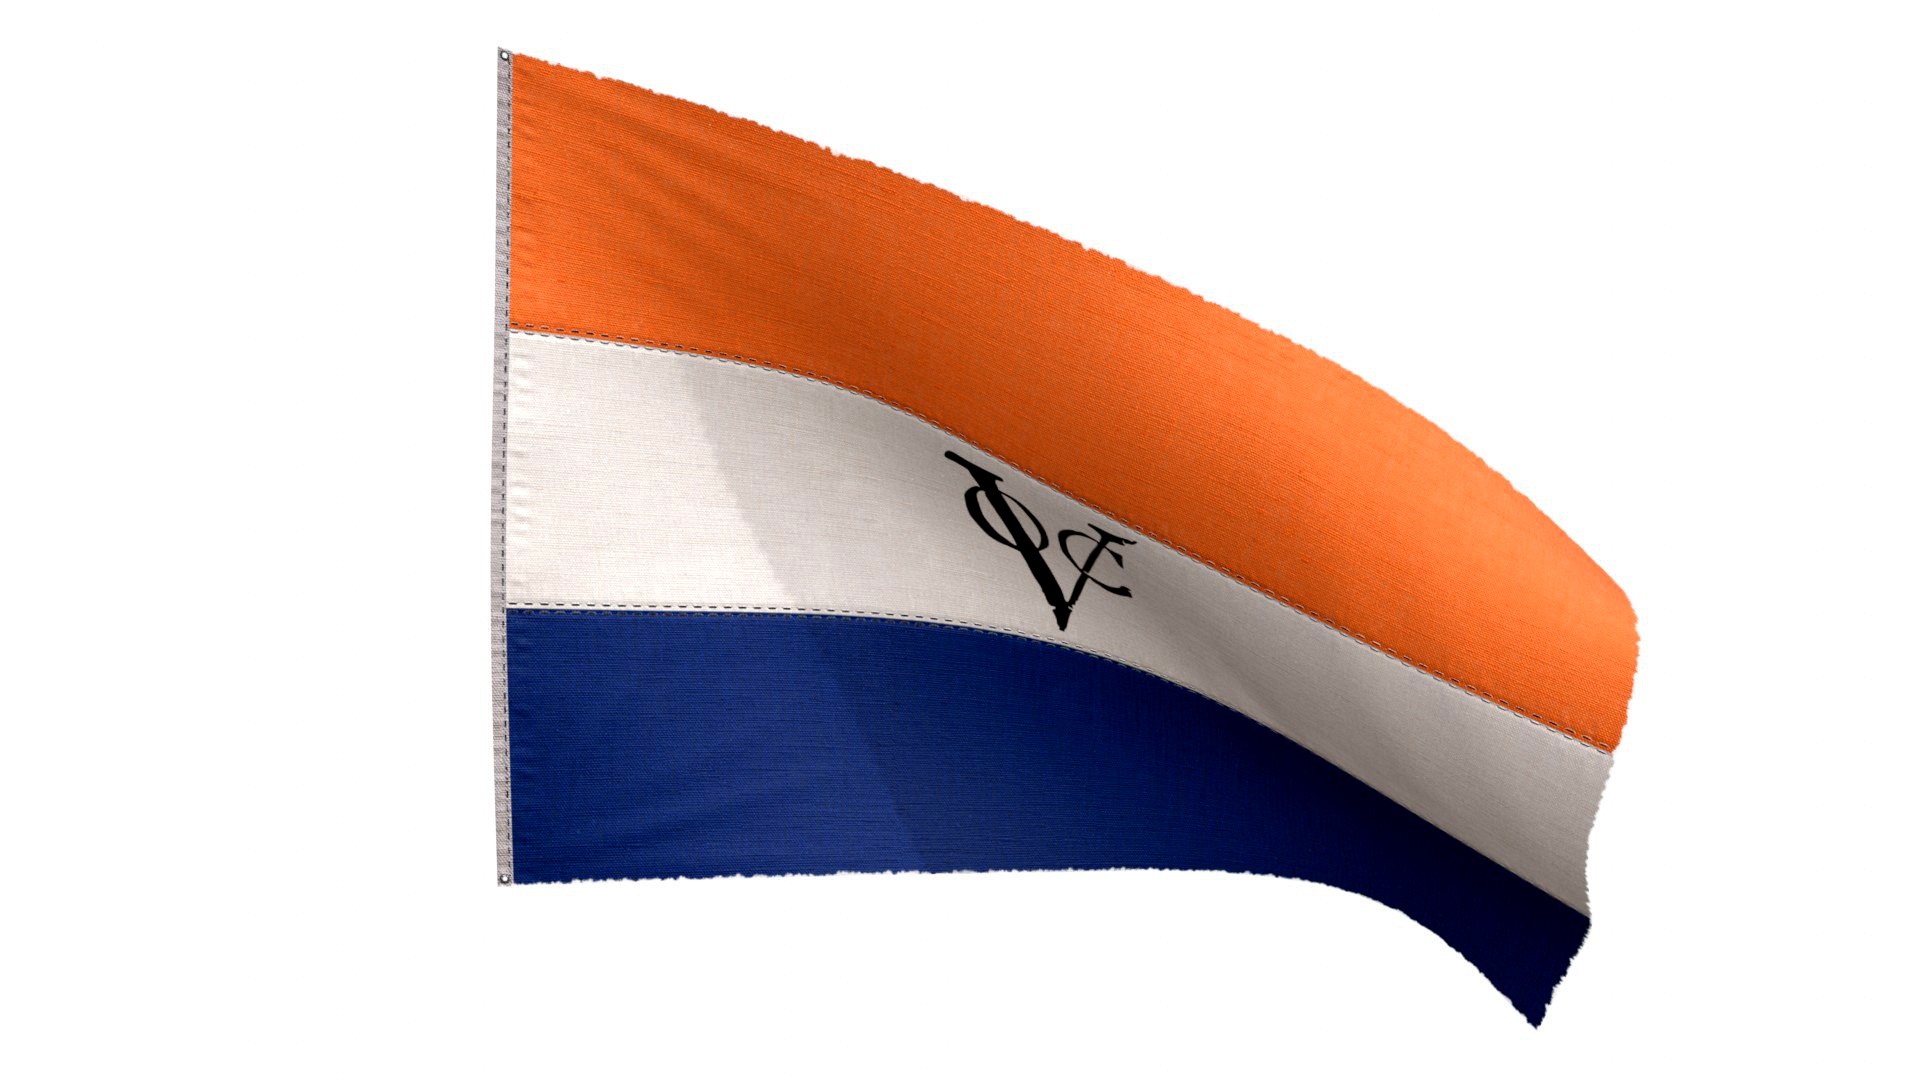 Dutch East Indies Company Flag 1602-1798